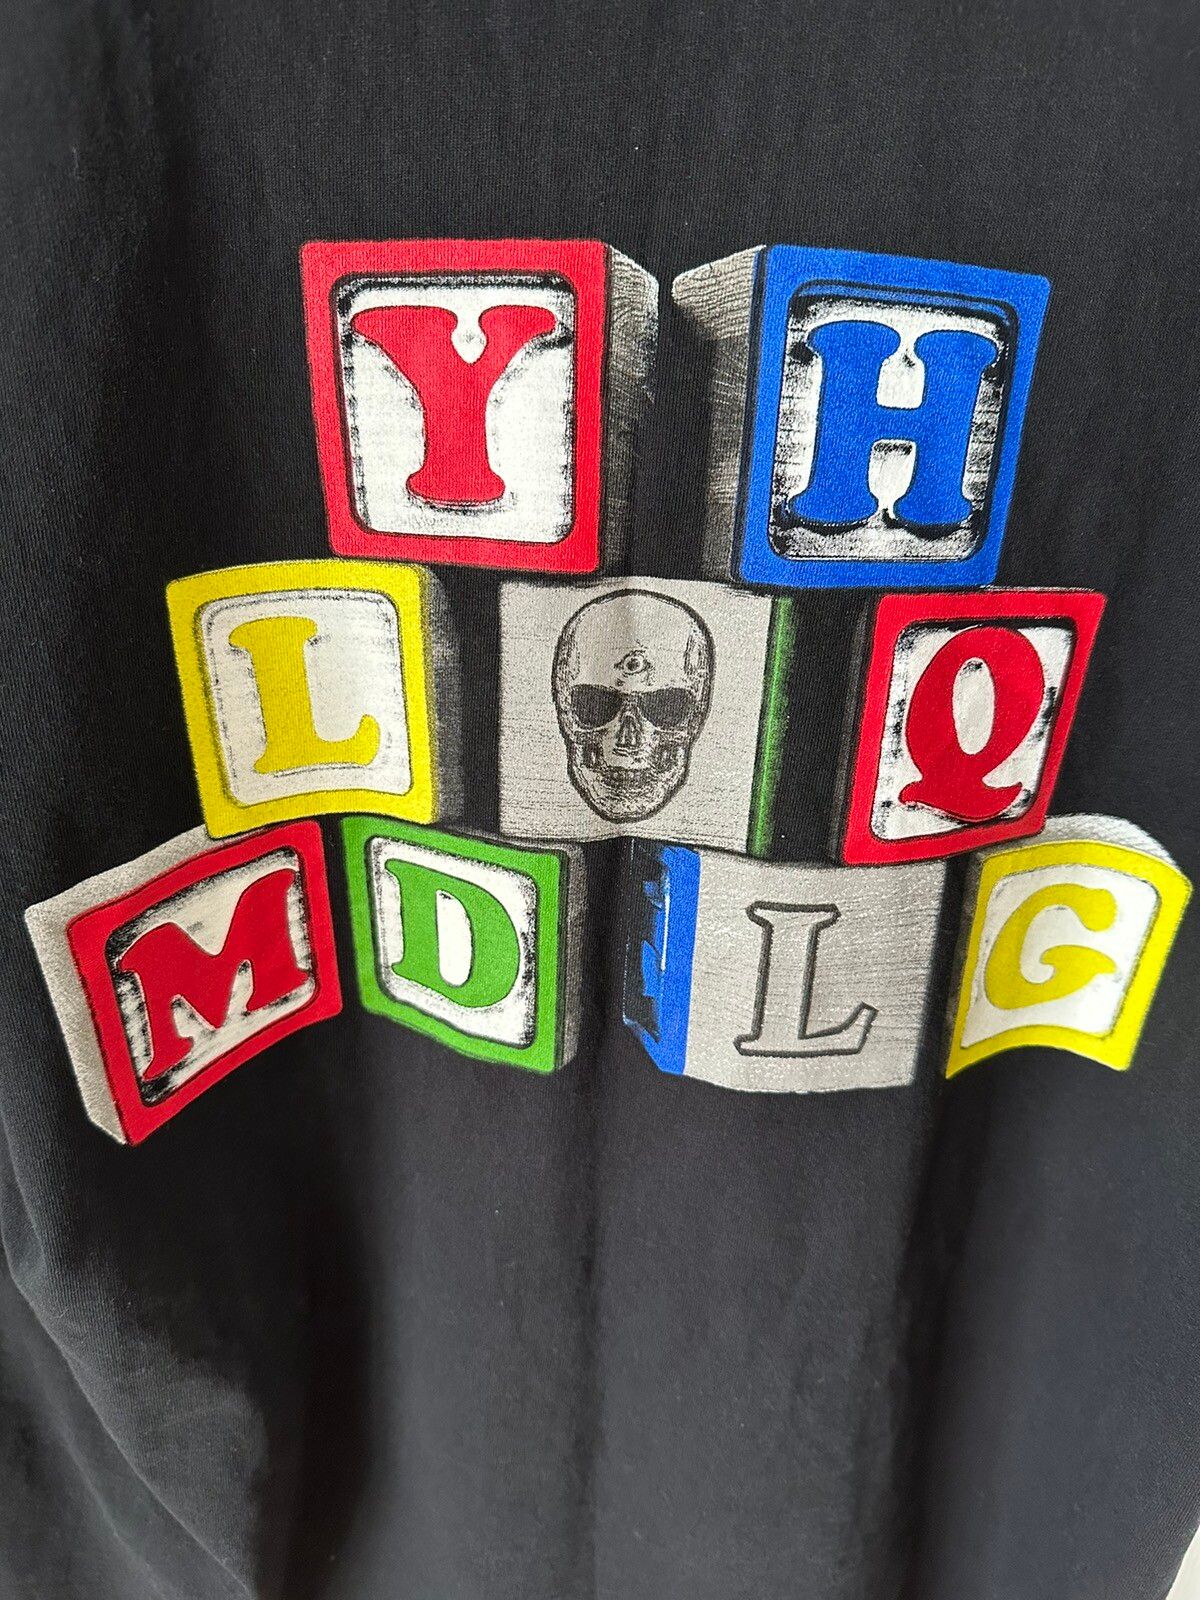 Rock Tees Bad Bunny YHLQMDLG Blocks Exclusive Tour Merchandise Shirt Size US XL / EU 56 / 4 - 4 Thumbnail